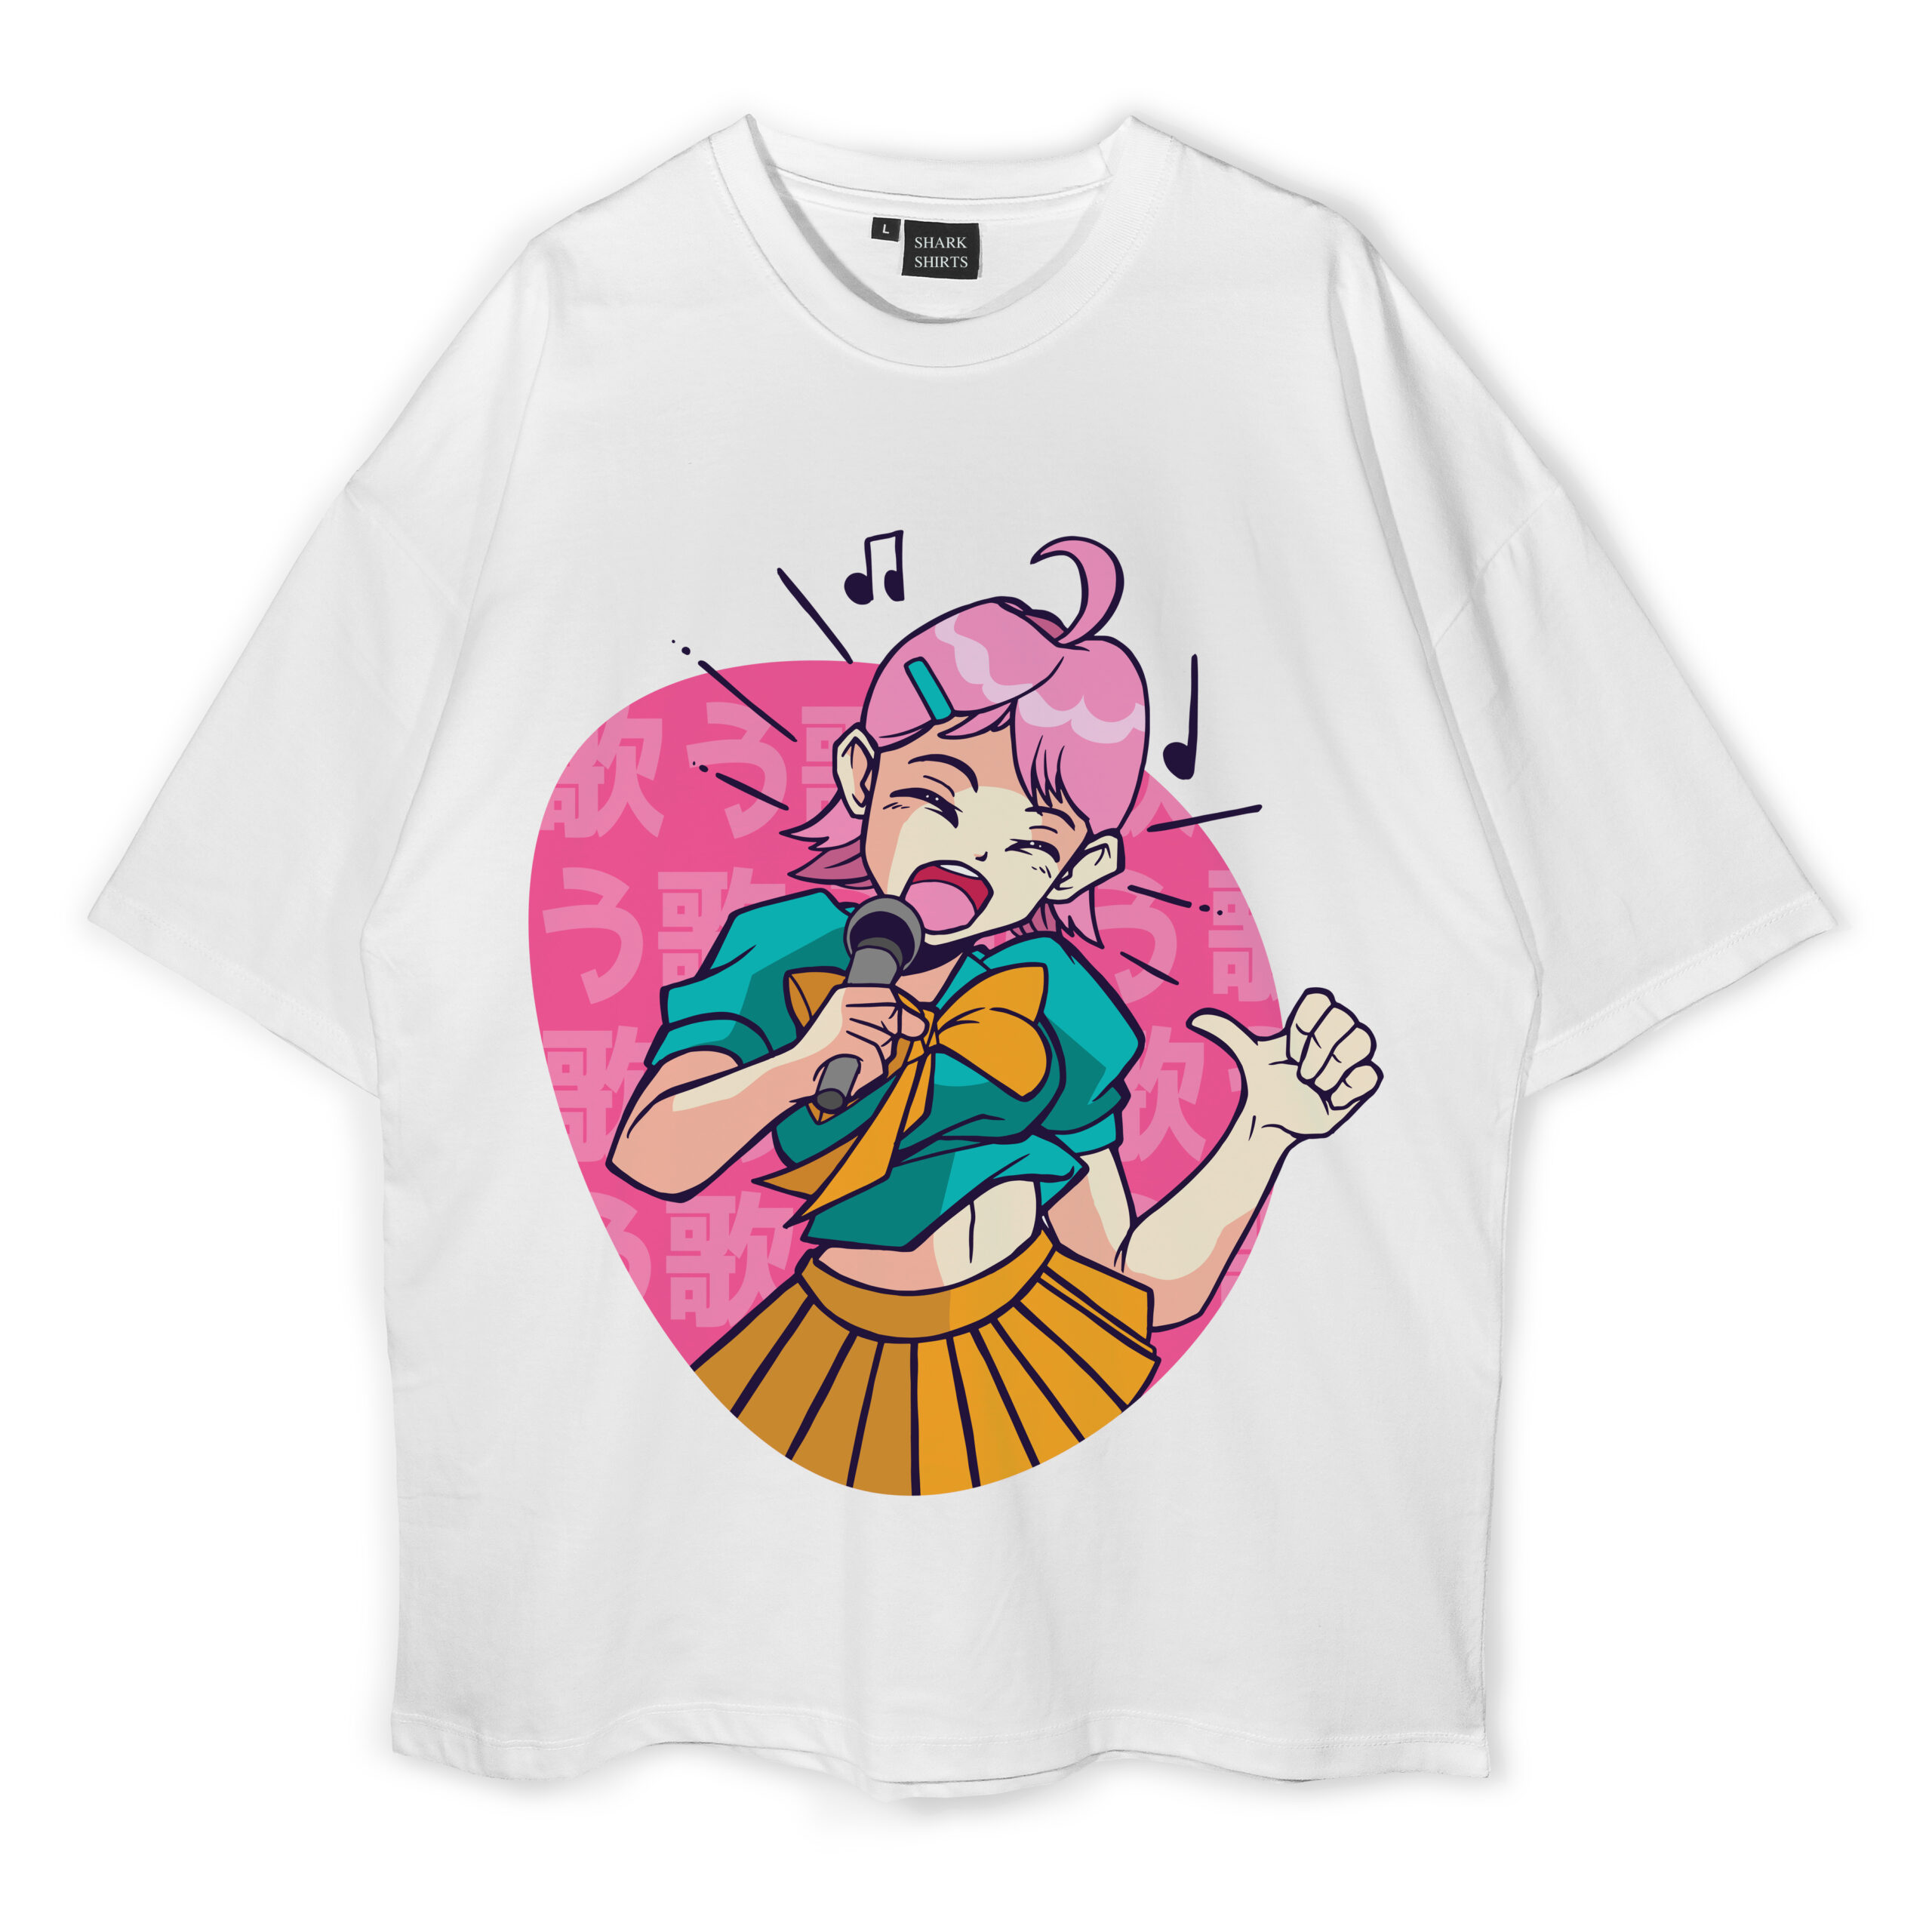 Oversized Anime T- shirts, Half Sleeves, Printed